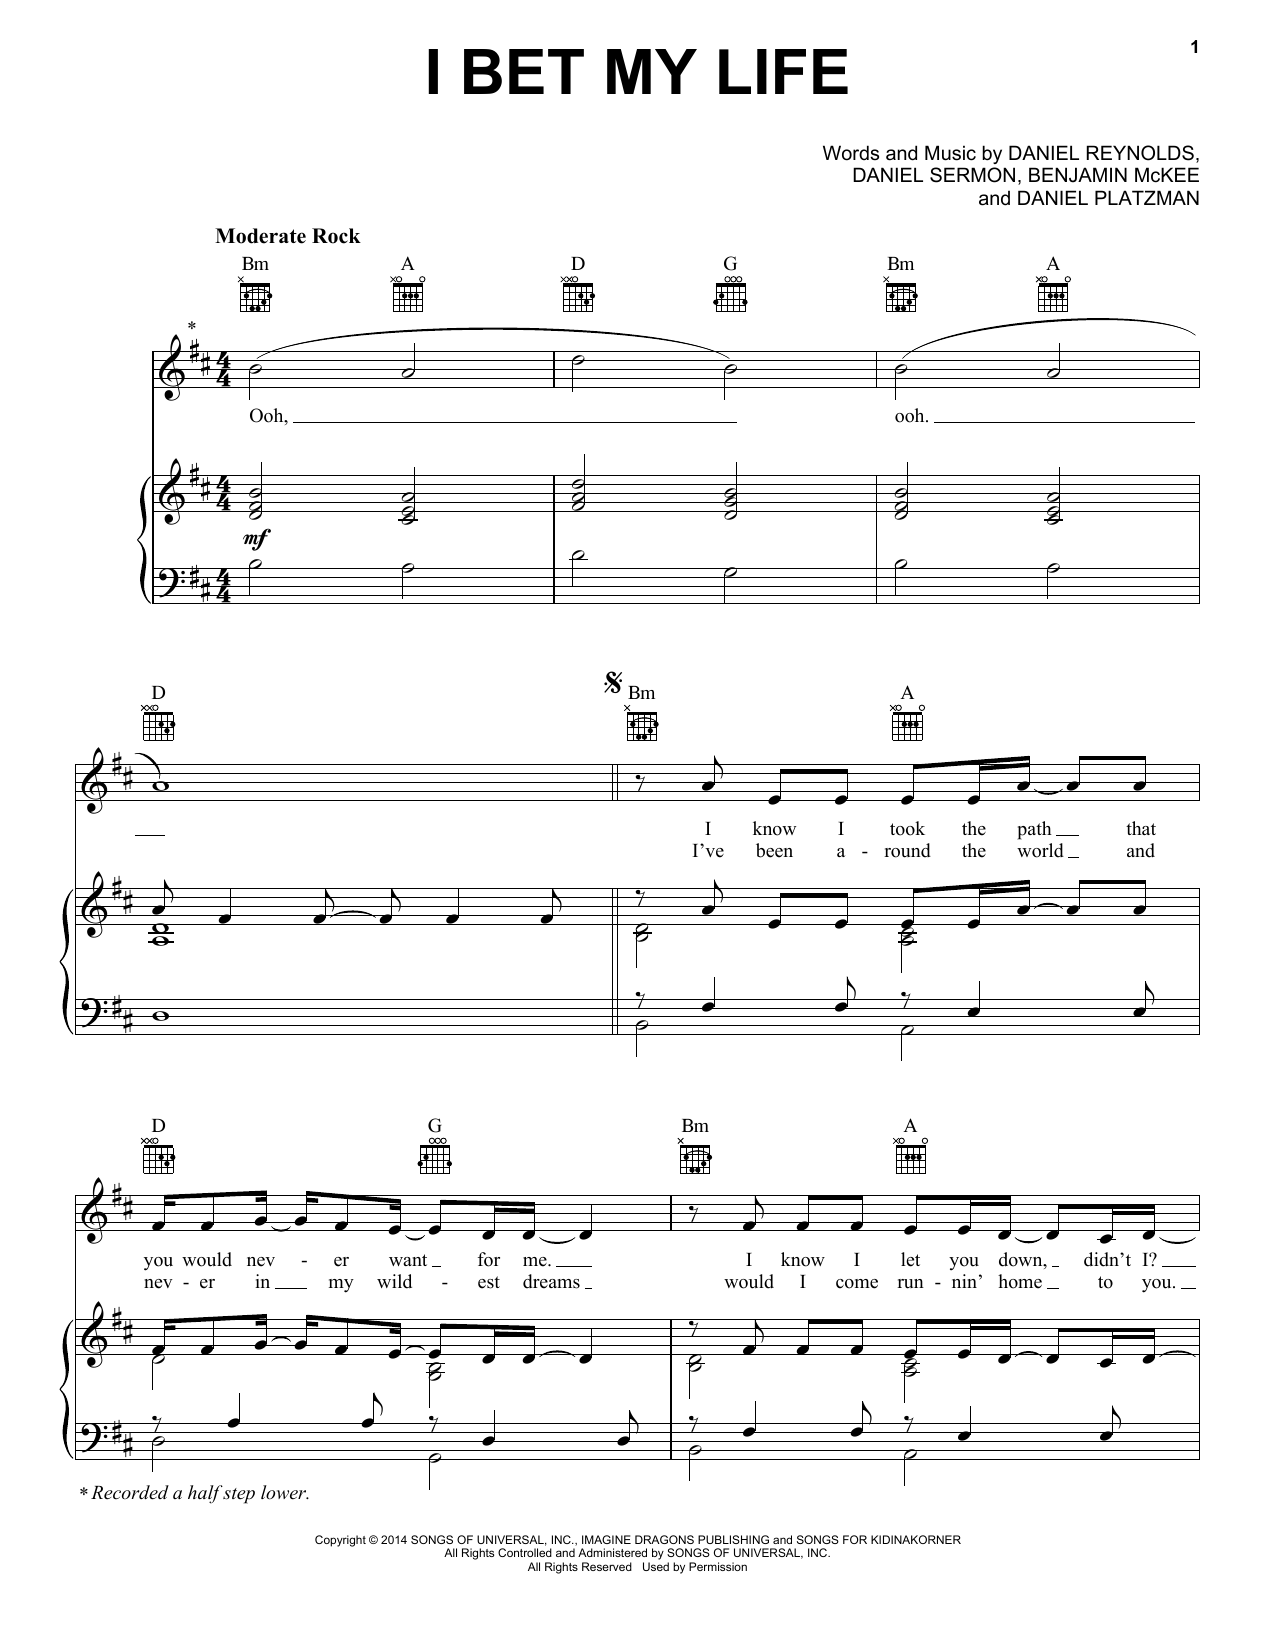 Imagine Dragons I Bet My Life Sheet Music Notes & Chords for Ukulele - Download or Print PDF